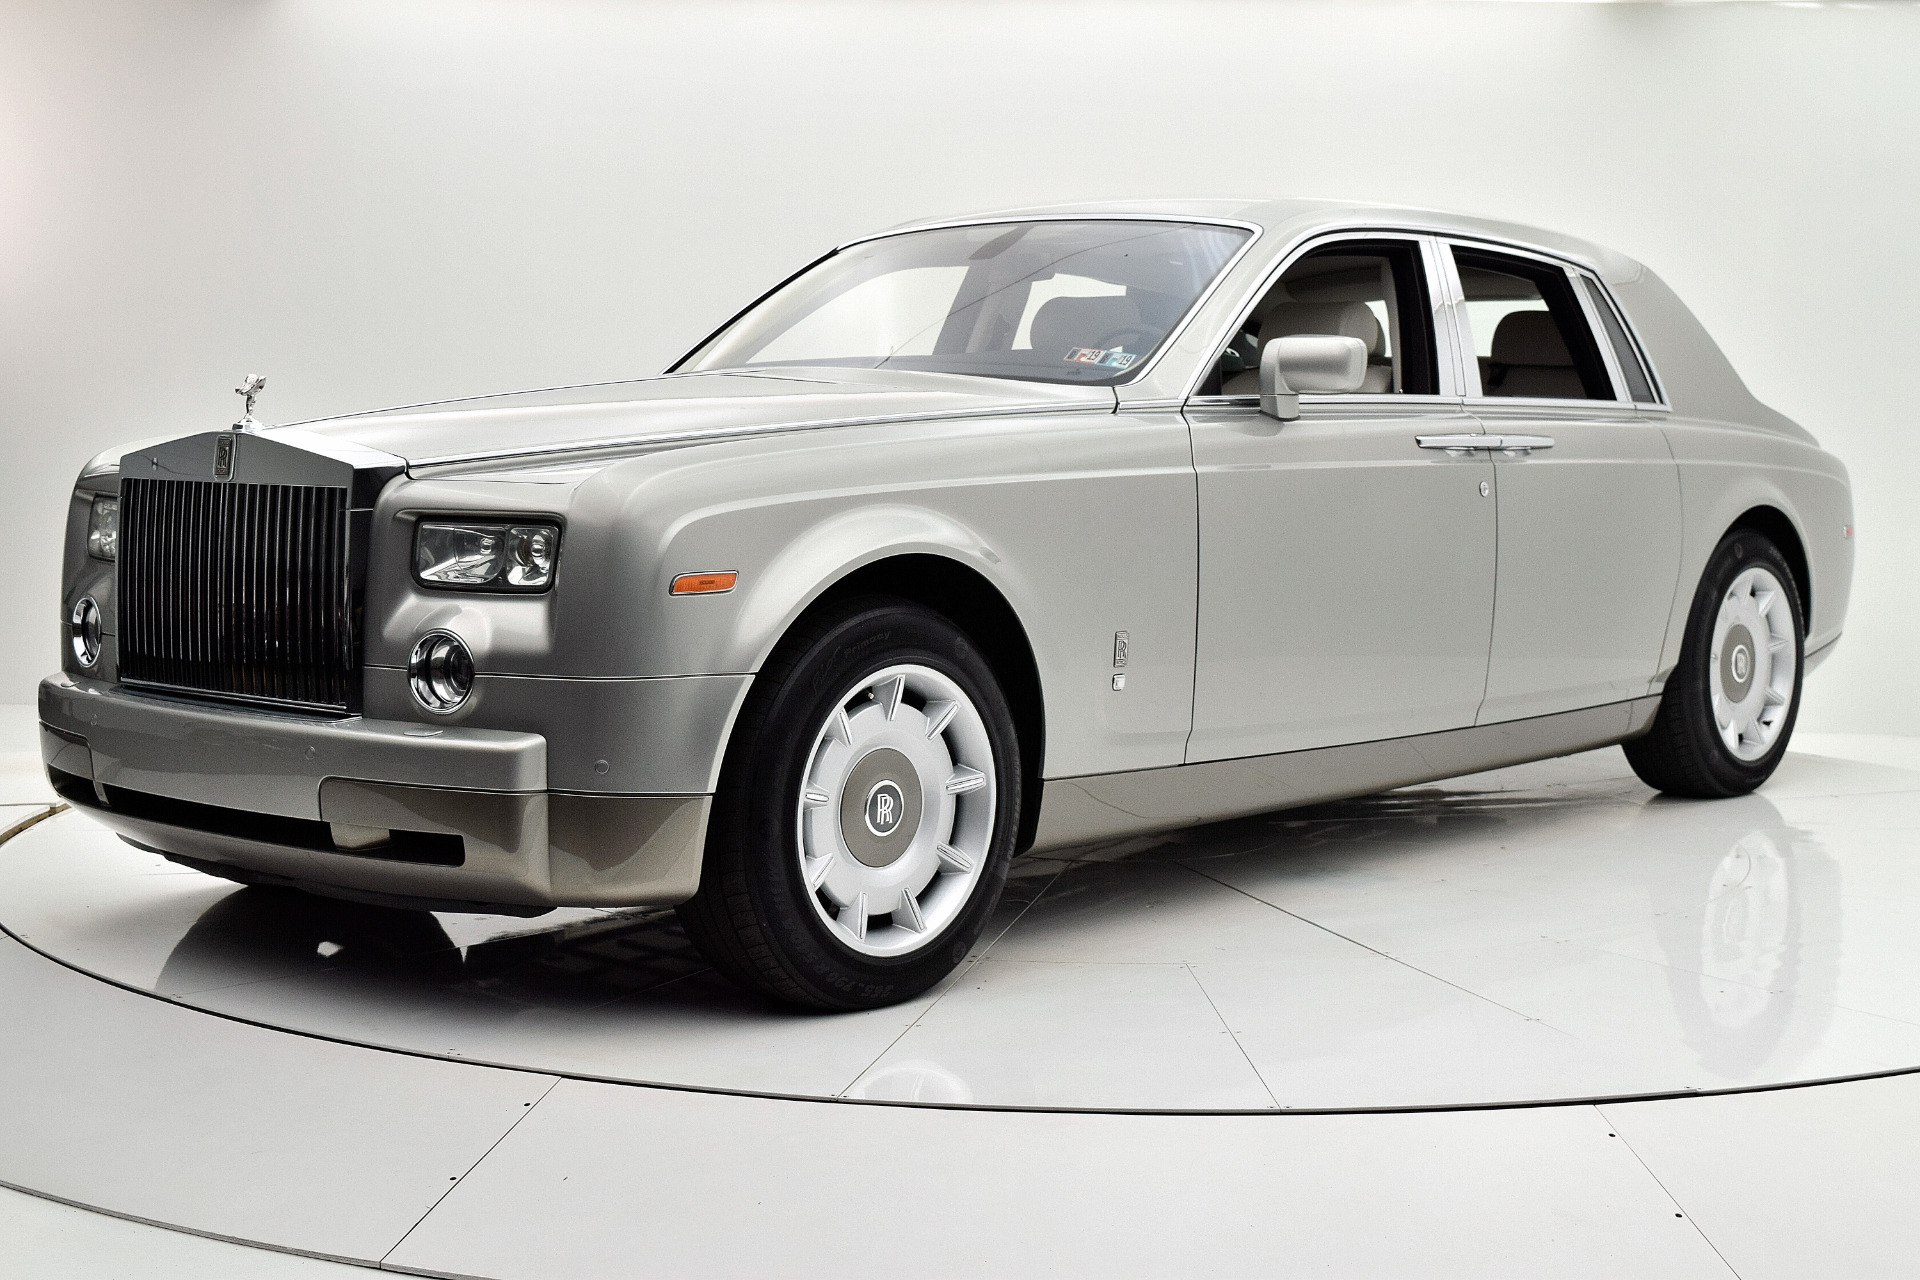 Used 2004 Rolls-Royce Phantom for sale Sold at F.C. Kerbeck Aston Martin in Palmyra NJ 08065 2